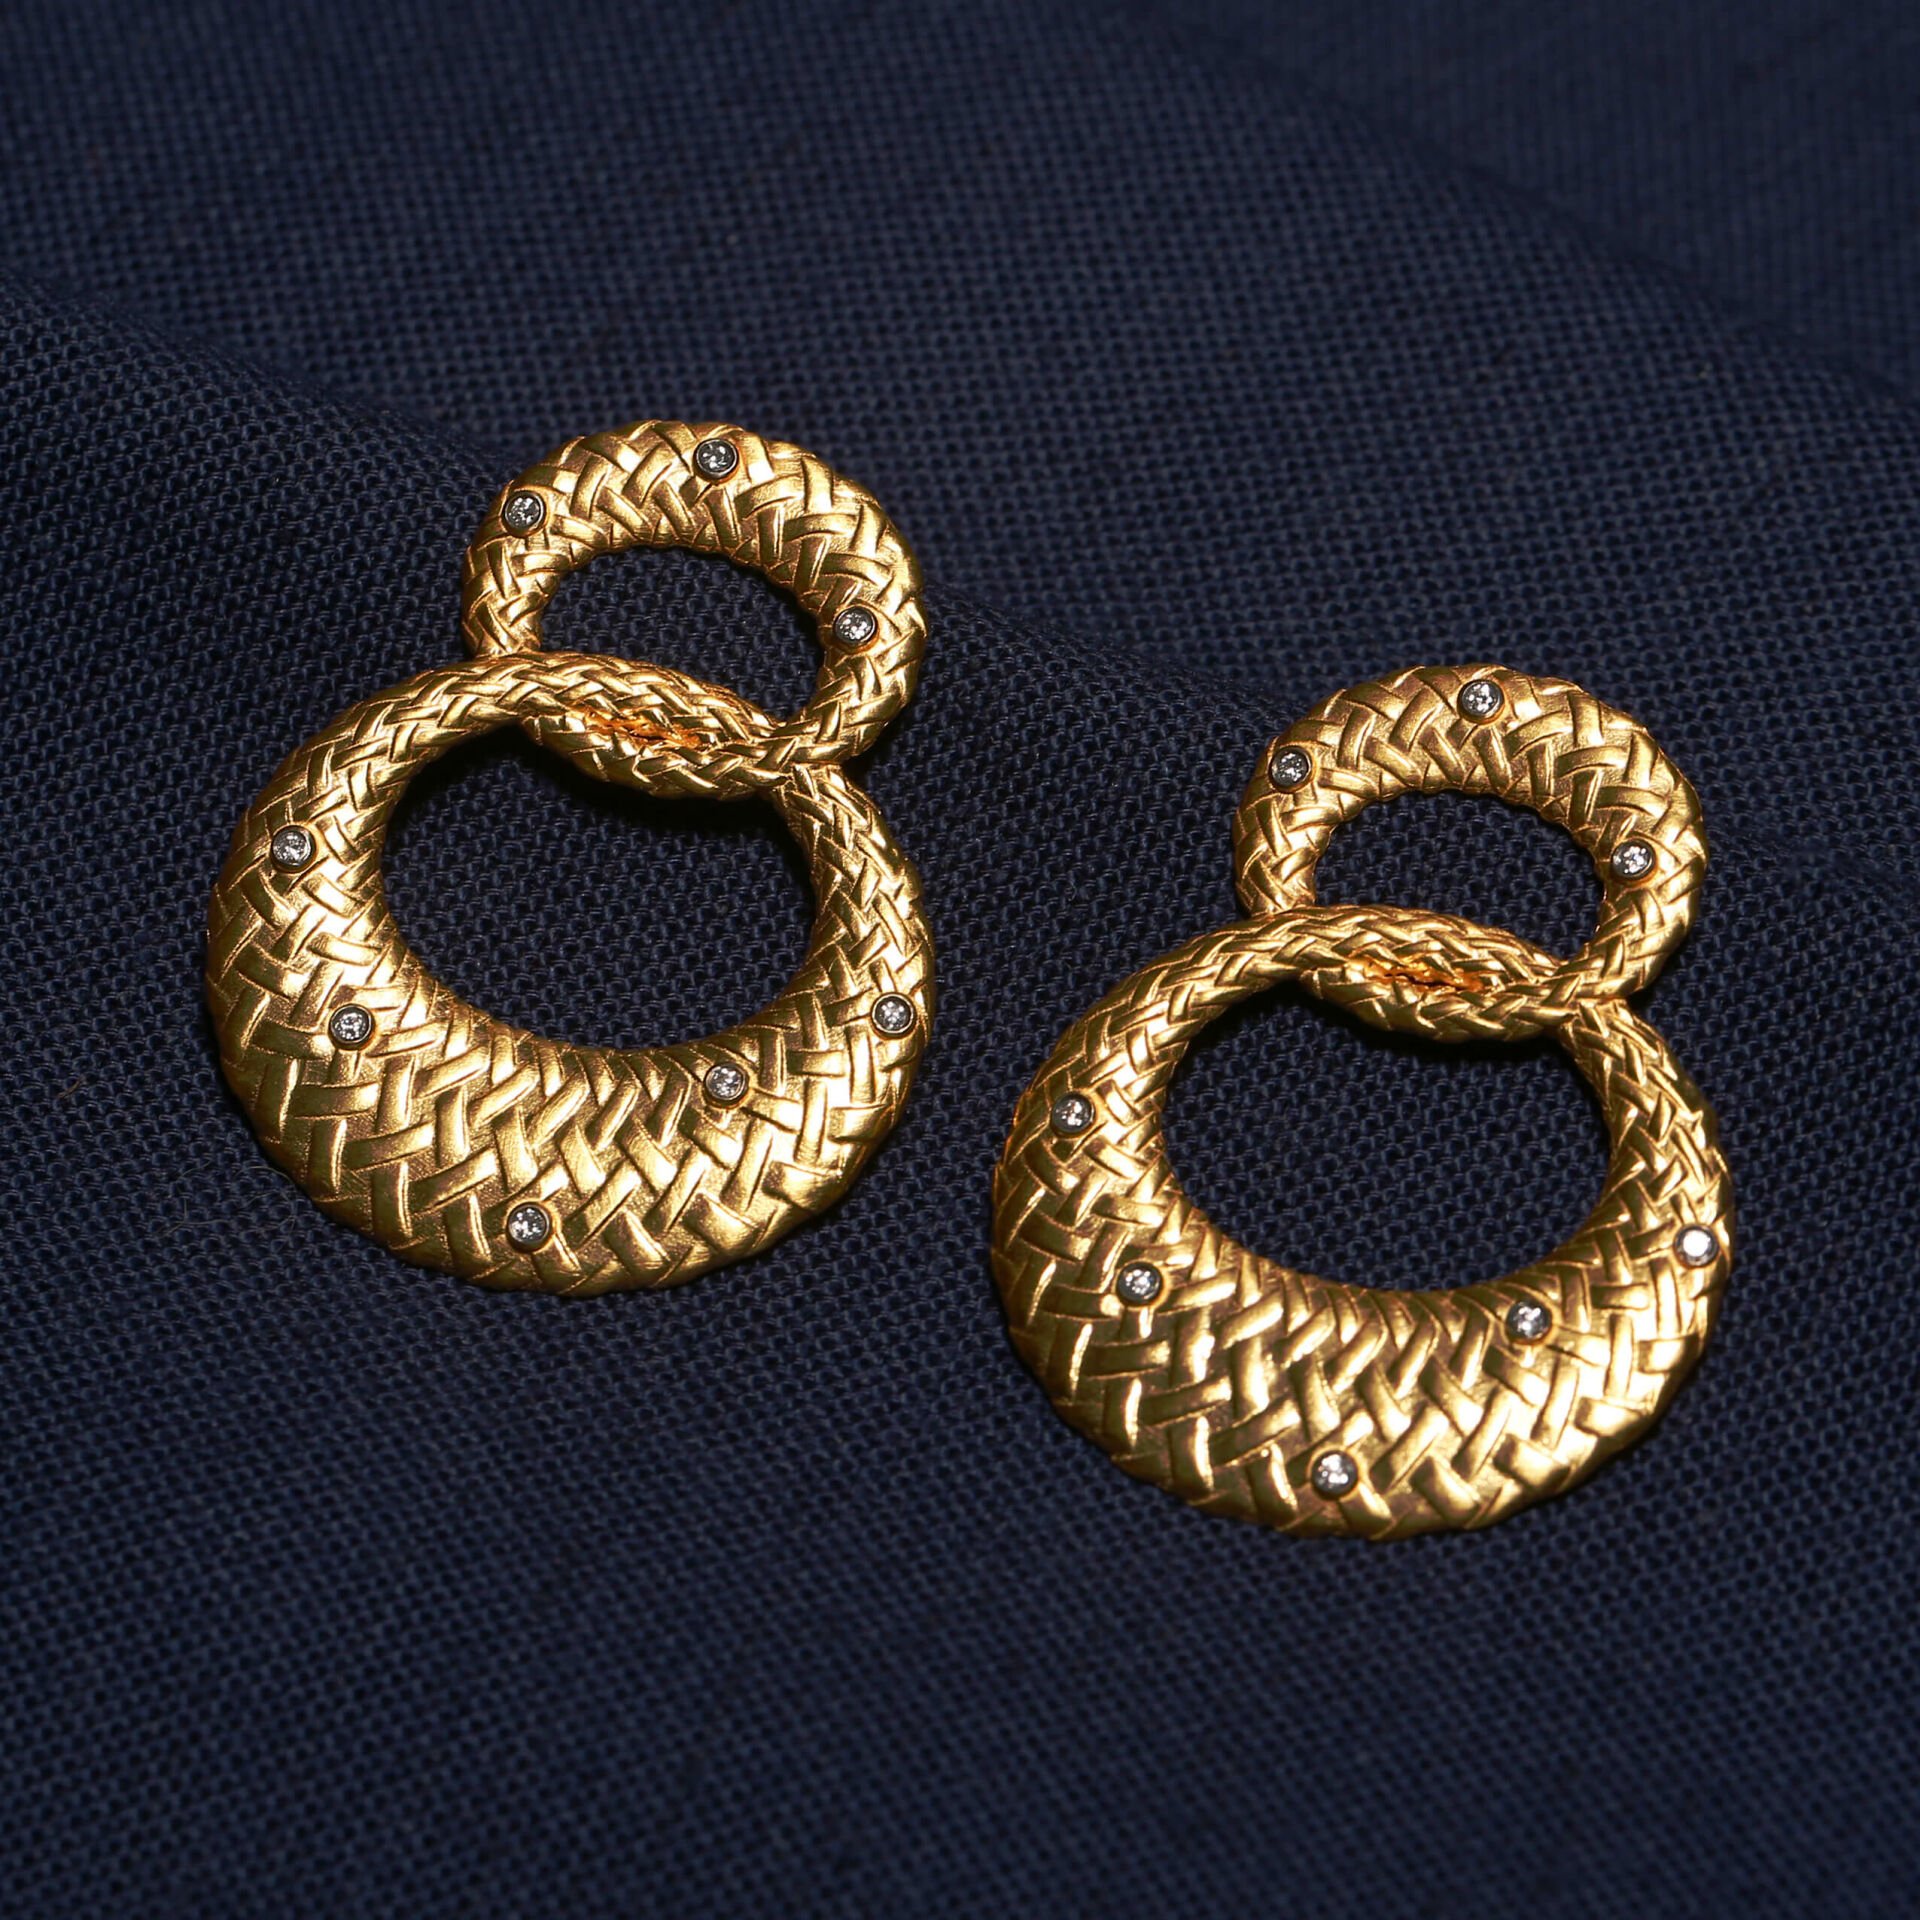 Earrings with Infinity Symbol Figures